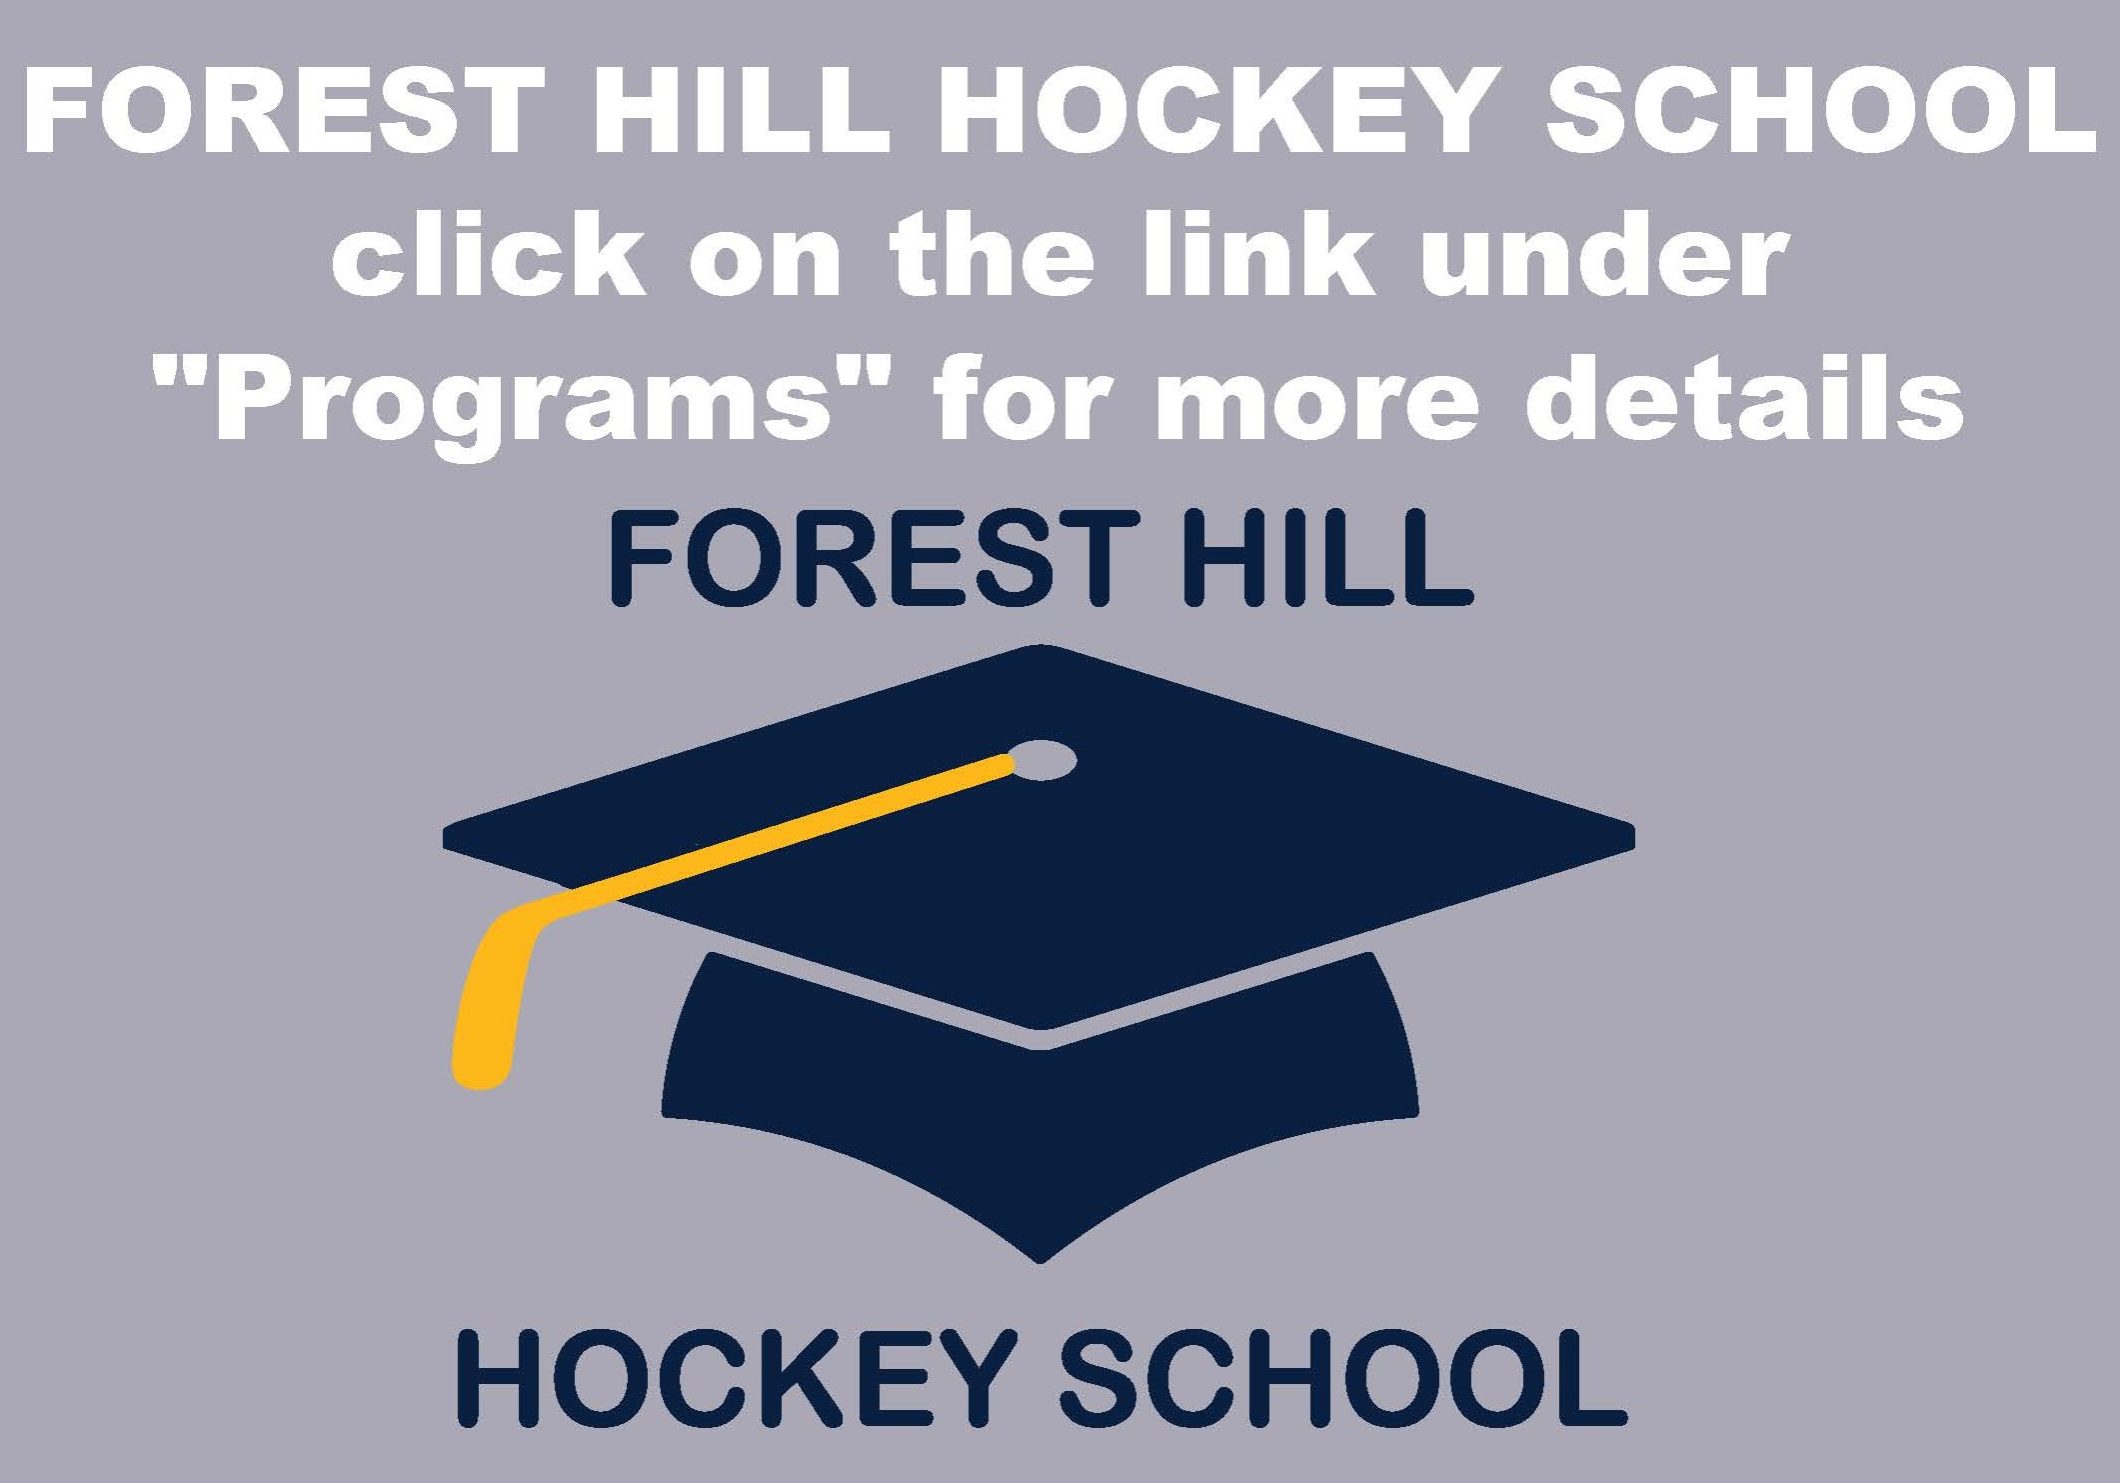 FH Hockey School - click on link2